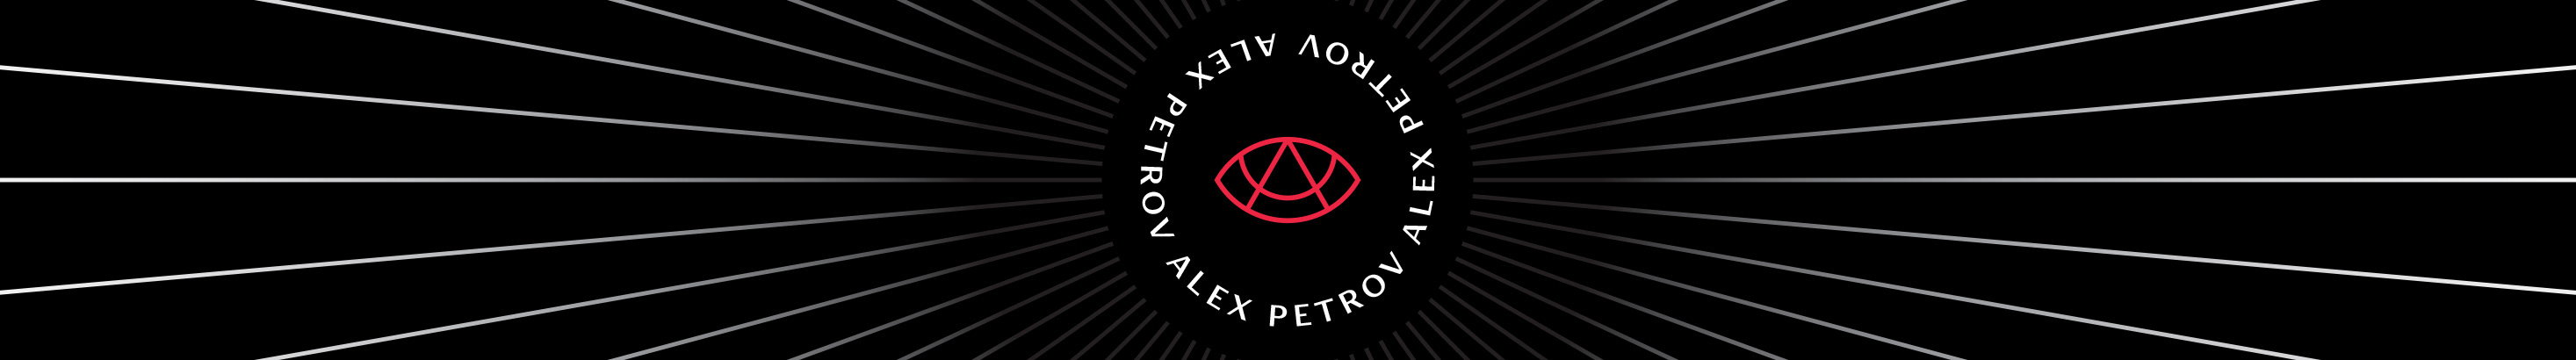 Alex Petrov profil başlığı